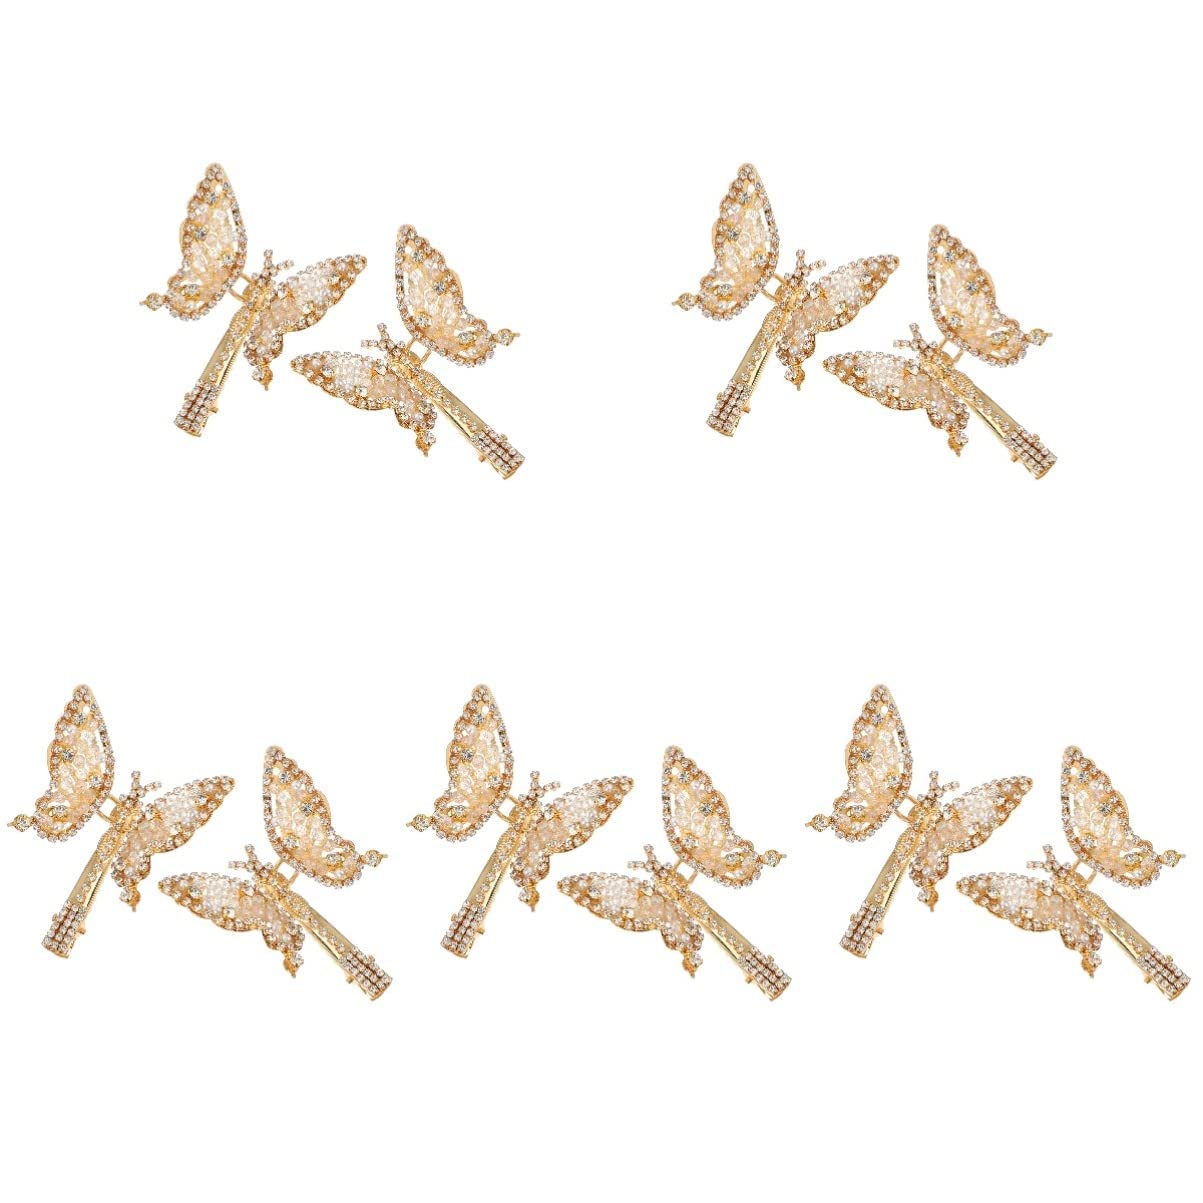 16 Stück Kristall Strass Strass Schmetterling Haarspangen Schmetterling Haarspangen Schmetterling Haarspangen Schmetterling Haarspangen Haarspangen ( Color : Goldenx6pcs , Size : 8X6X1.5CMx8pcs )